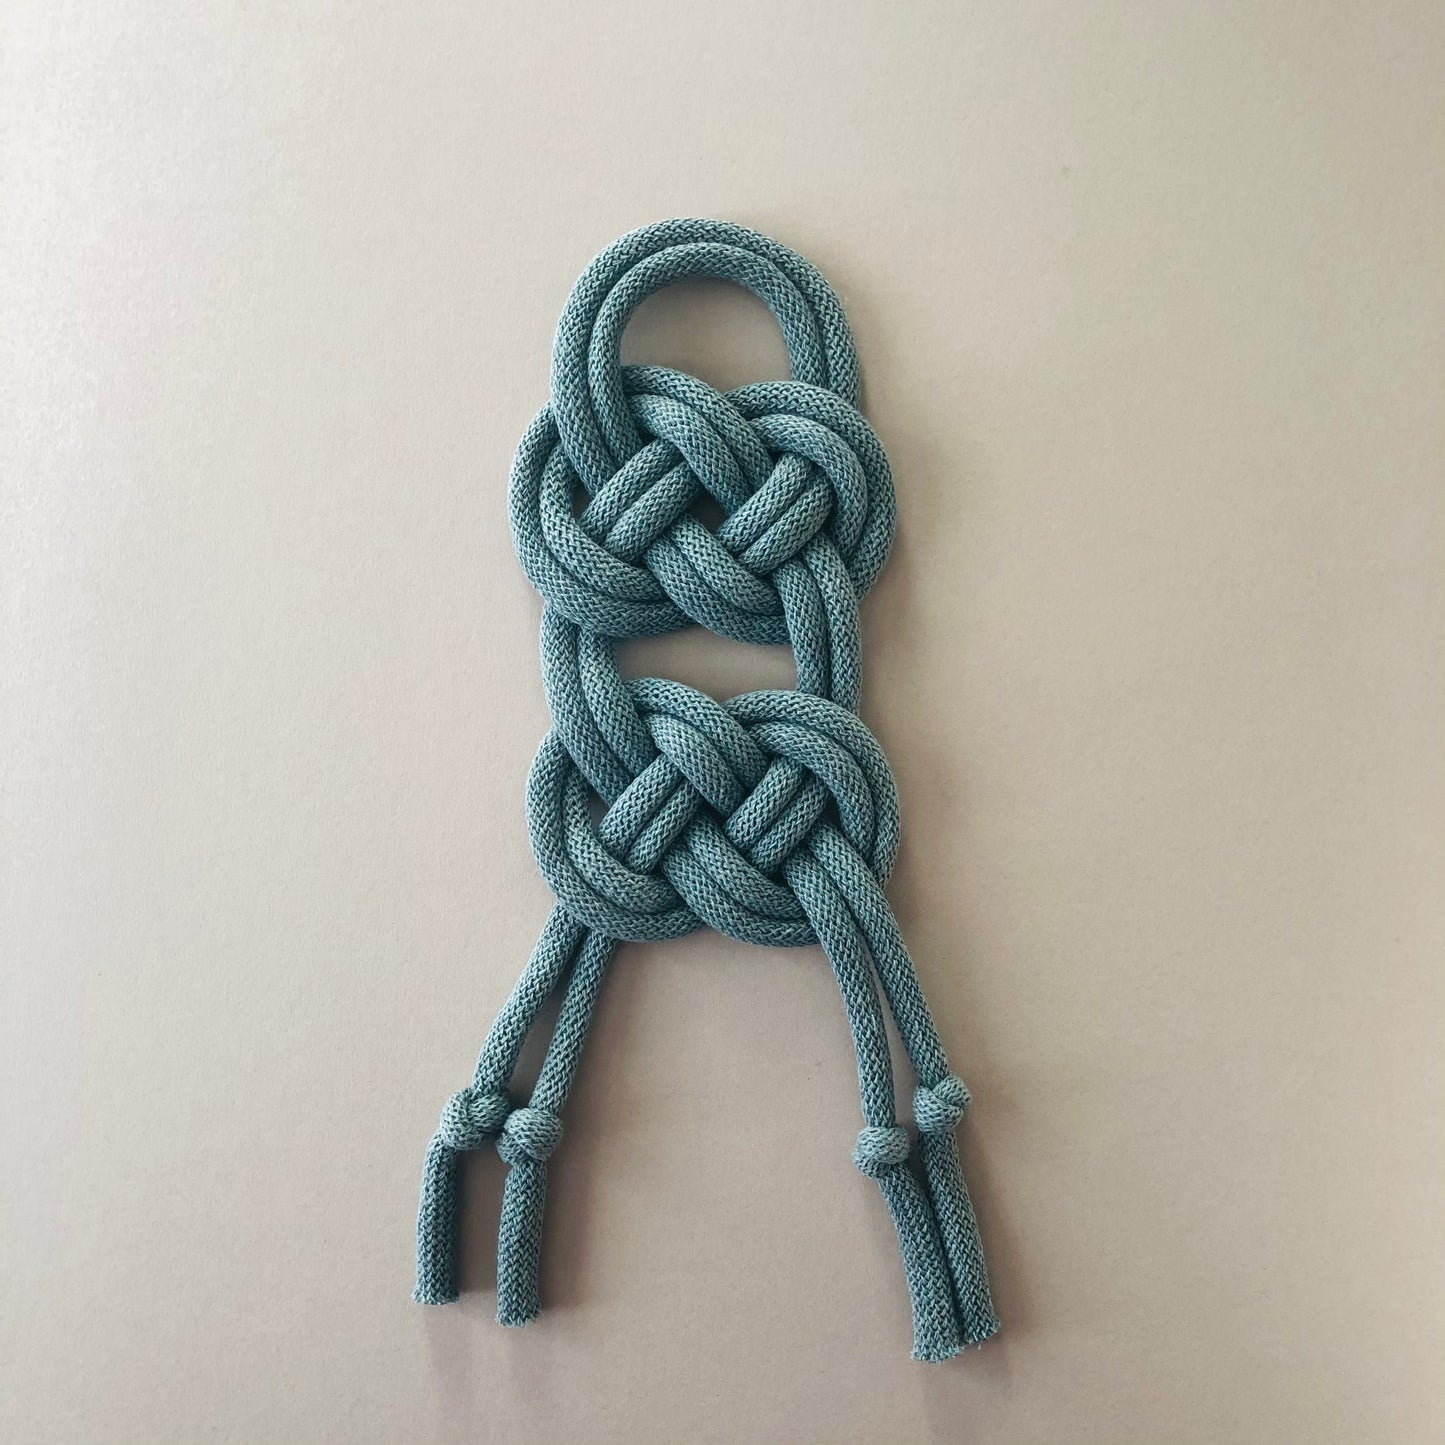 Wall Knot ‘Noomi’ - Macrame wall hanging - knottinger.